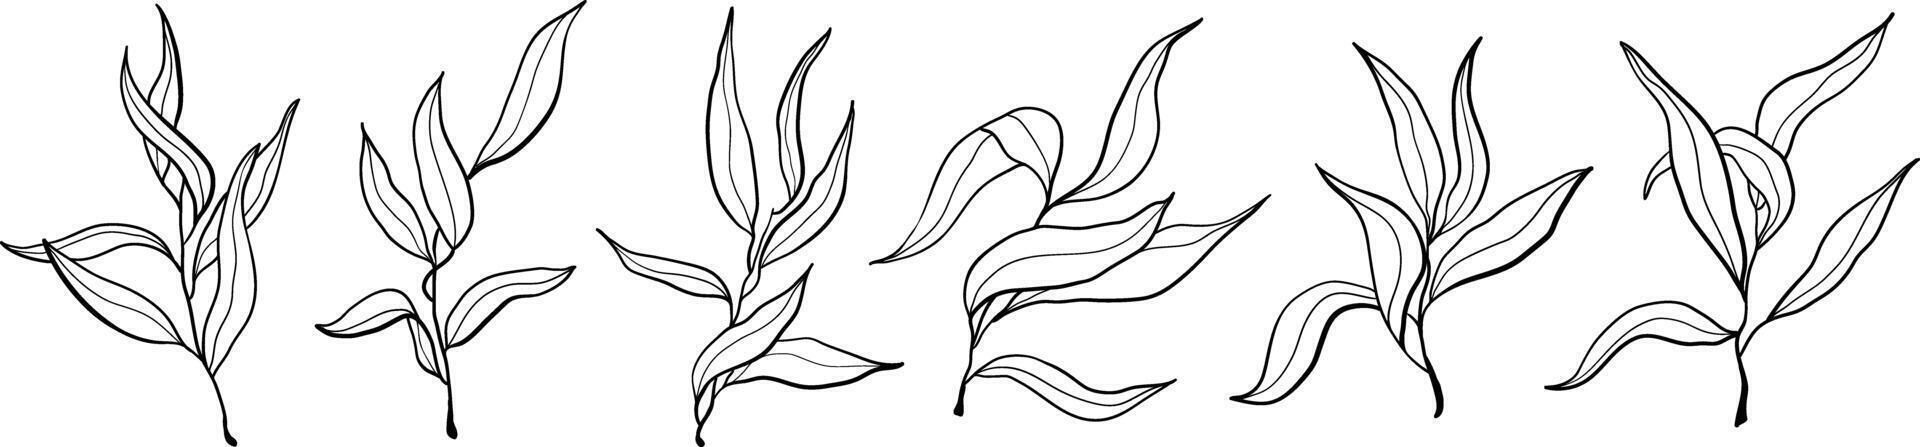 vector mano dibujado naturaleza aceituna ramas íconos colocar. garabatear plantas ilustración aislado en blanco antecedentes.